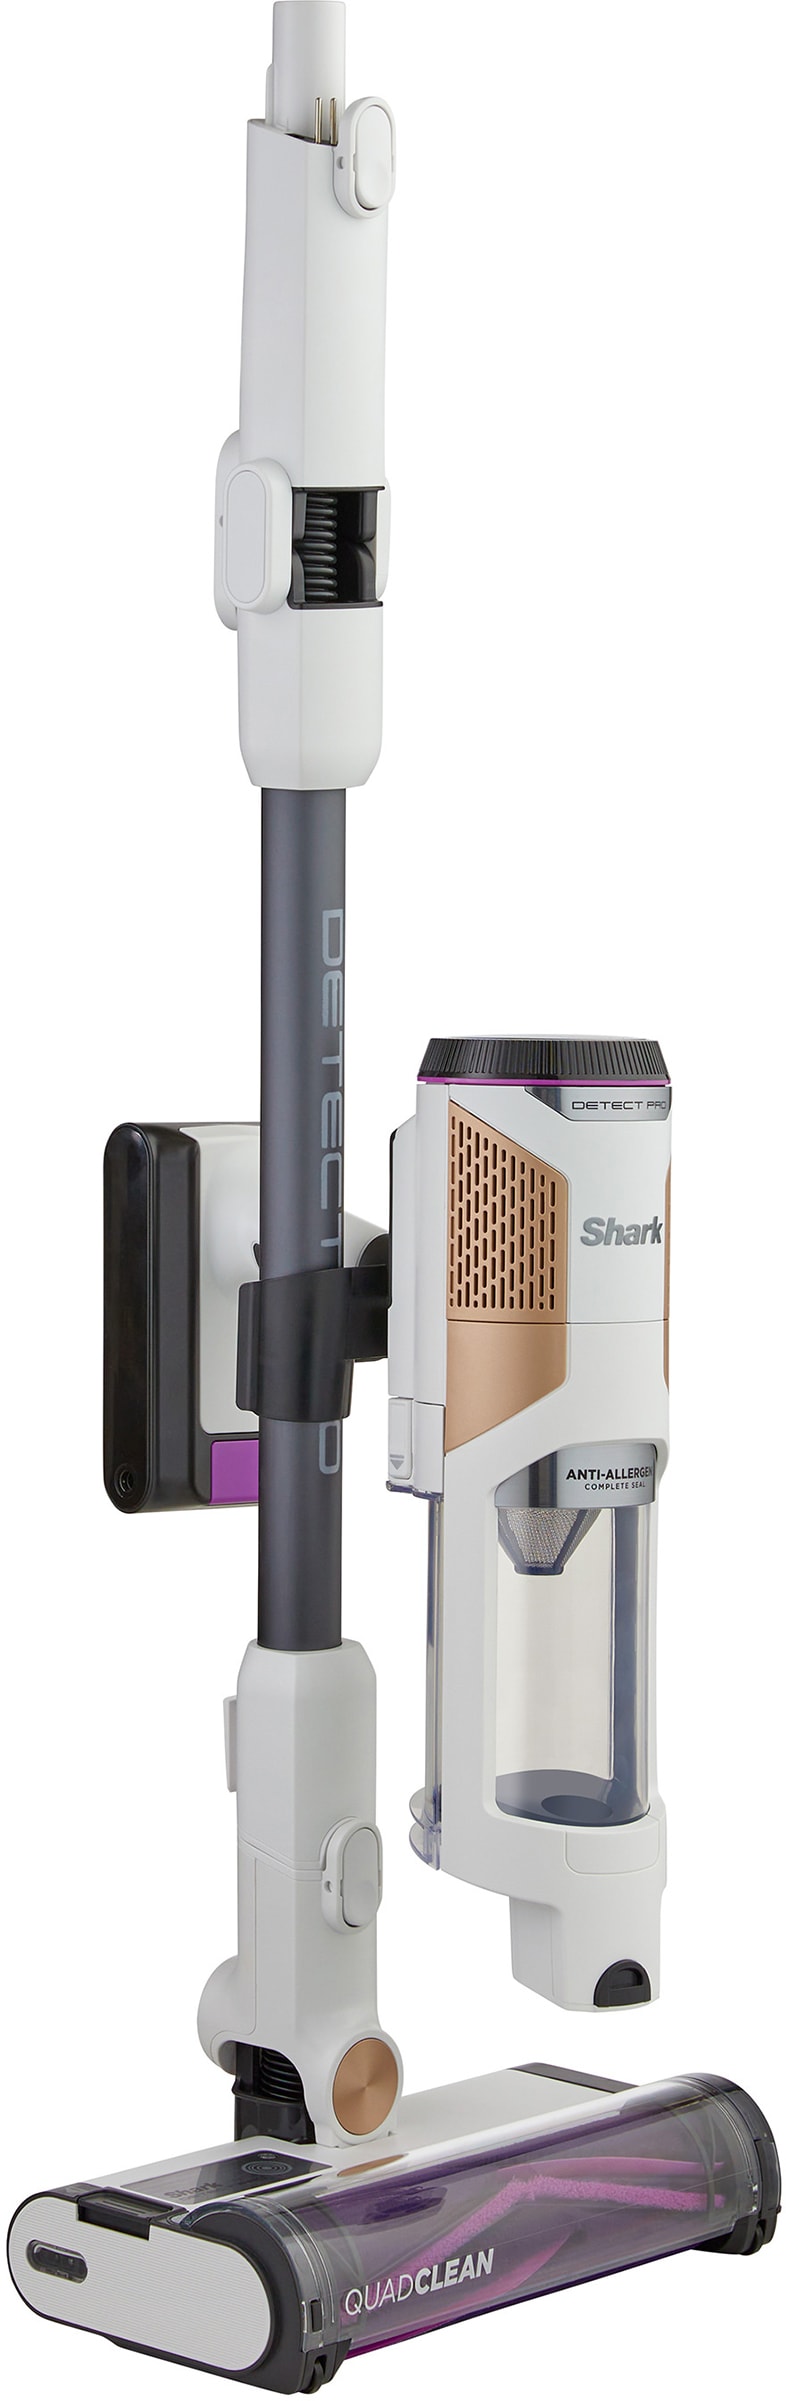 SHARK Aspirateur balai Shark detect Pro  IW1611EU